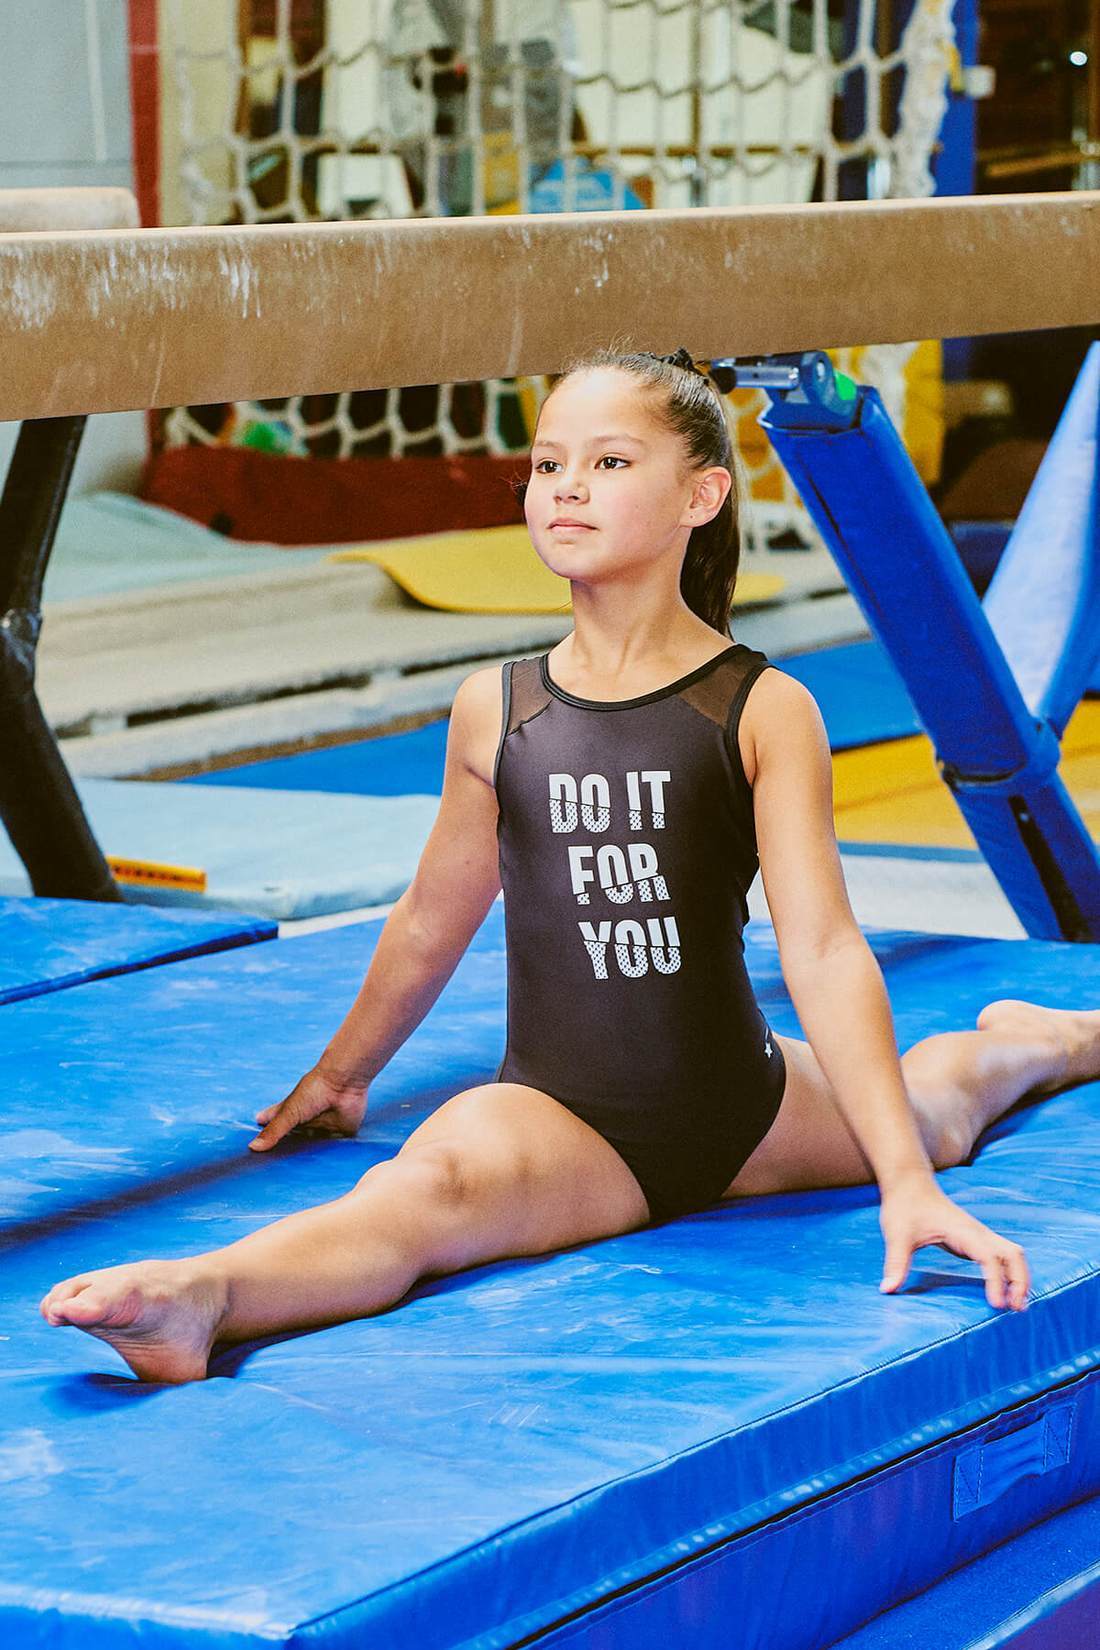 Gymnastics Leotards for Girls Burst